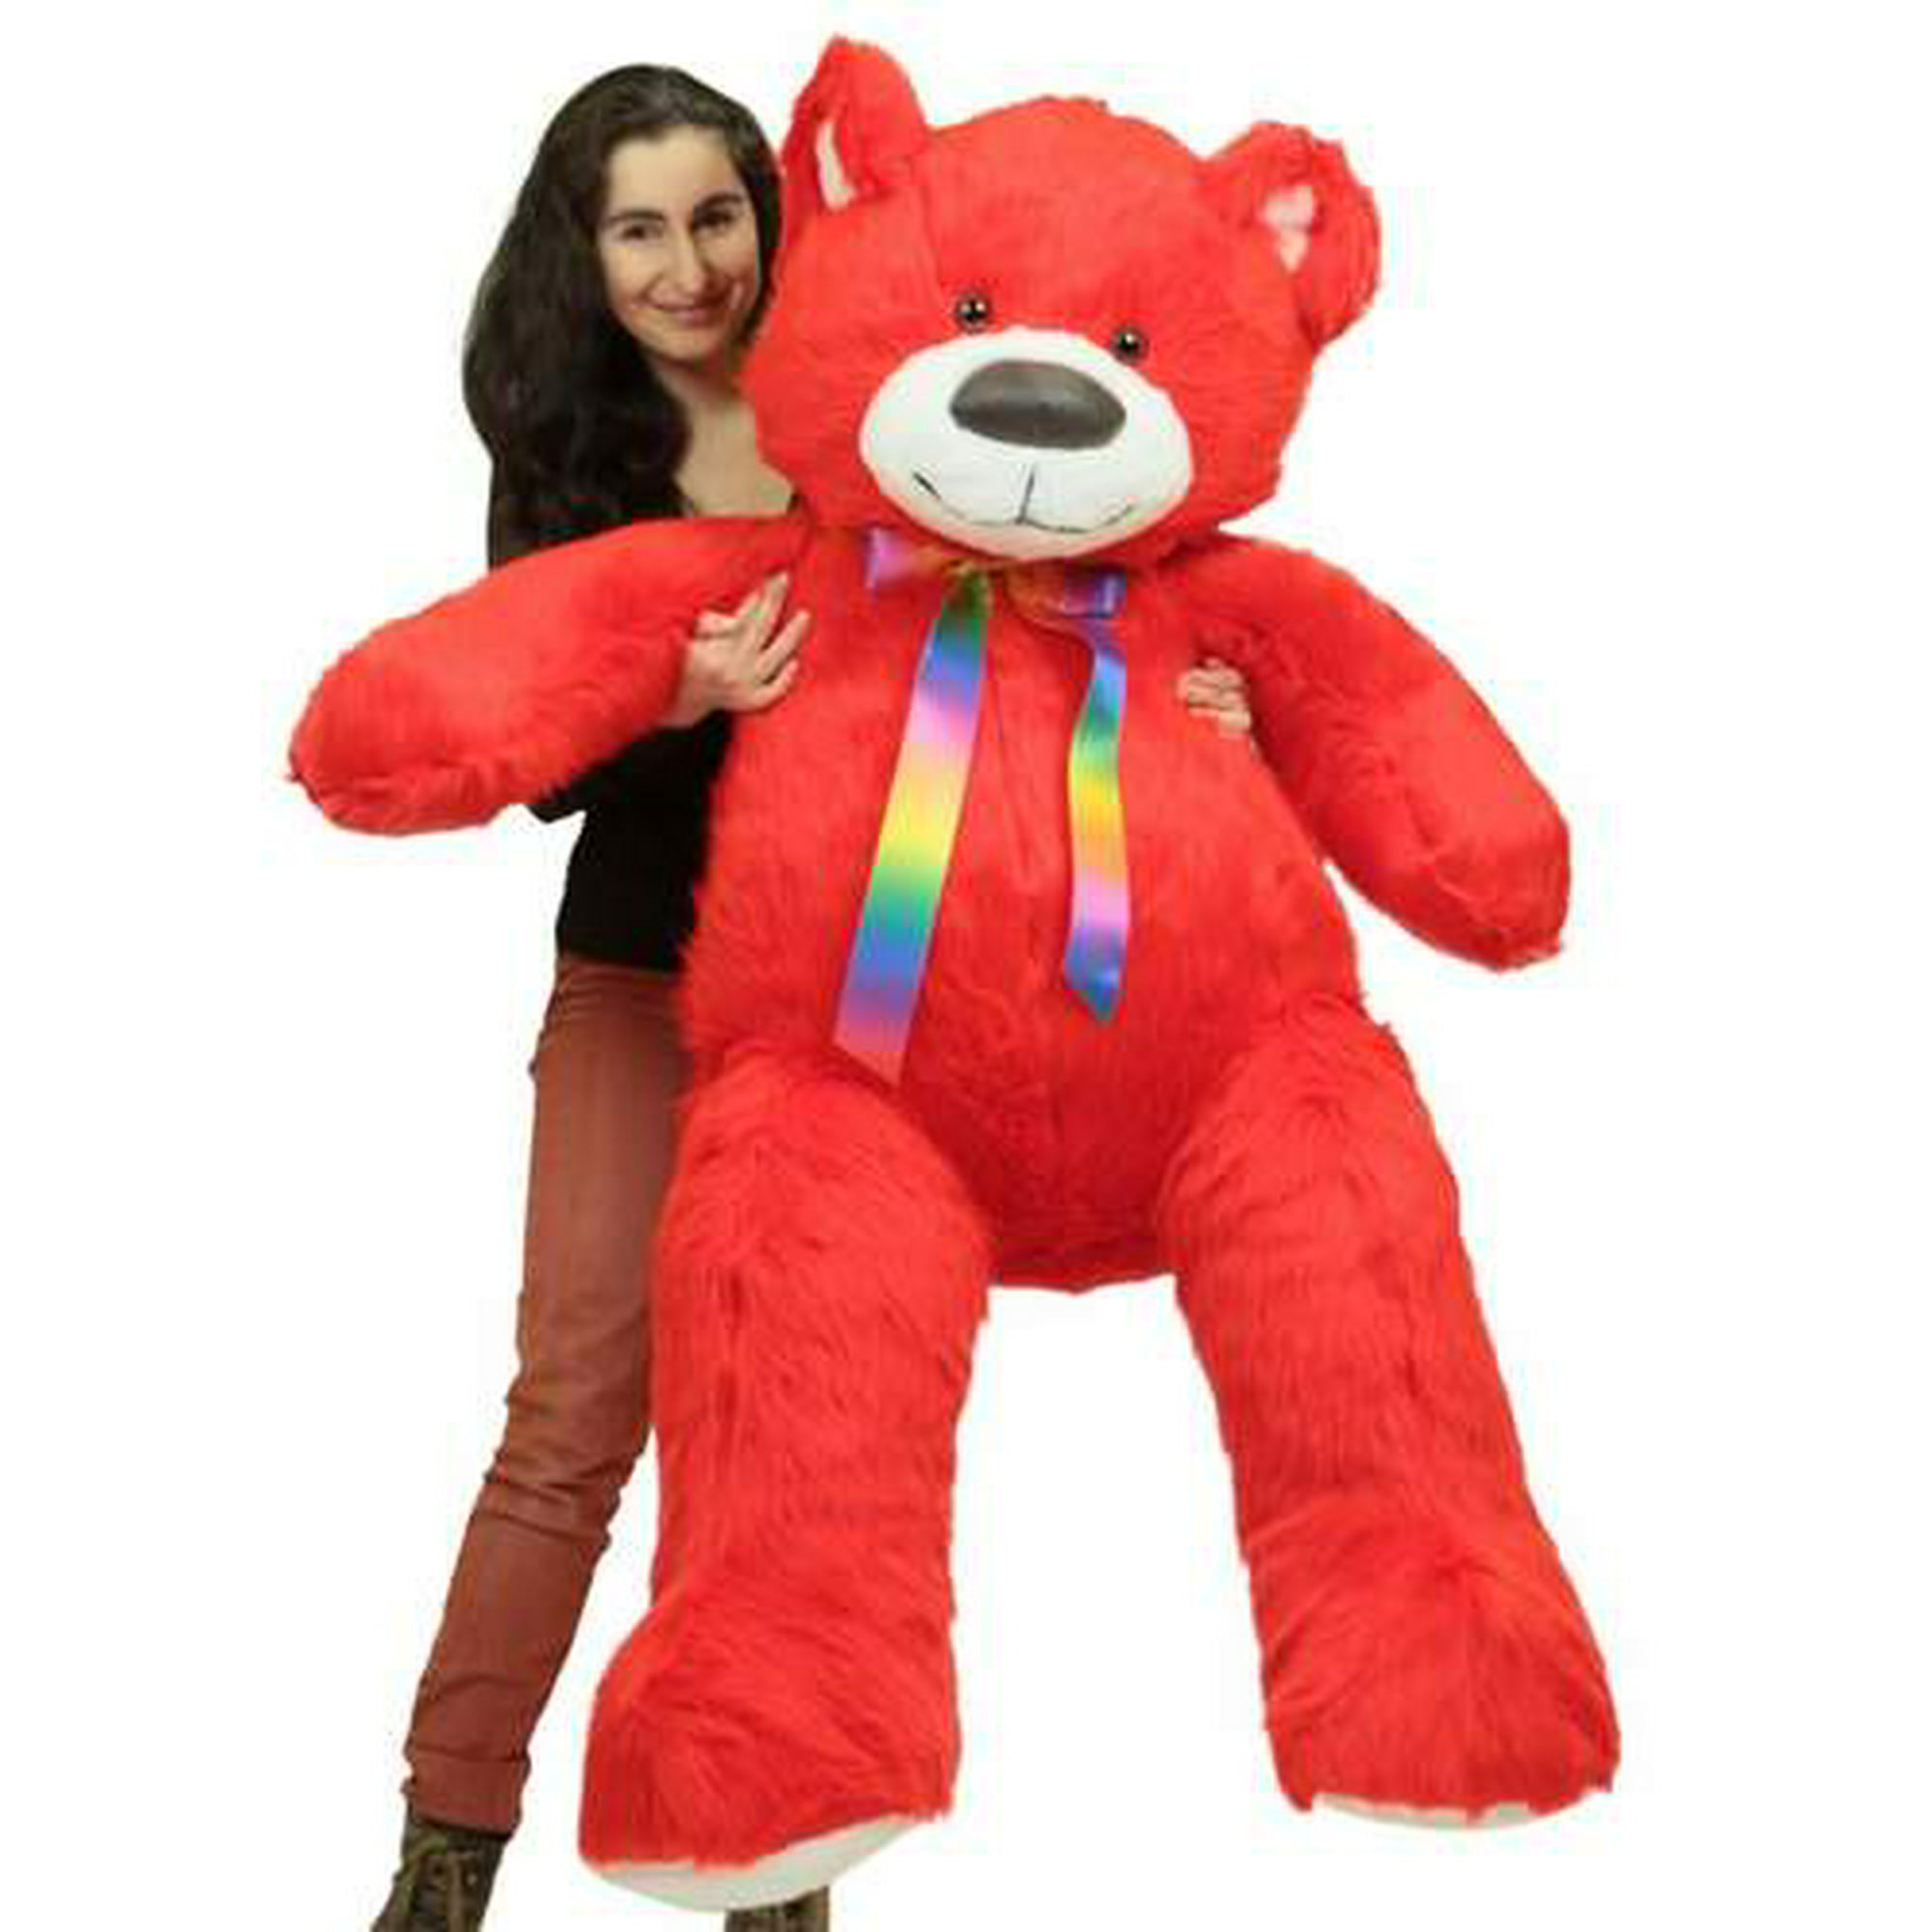 Giant 5 Foot Red Teddy Bear, Big Plush Soft Life Size Stuffed ...